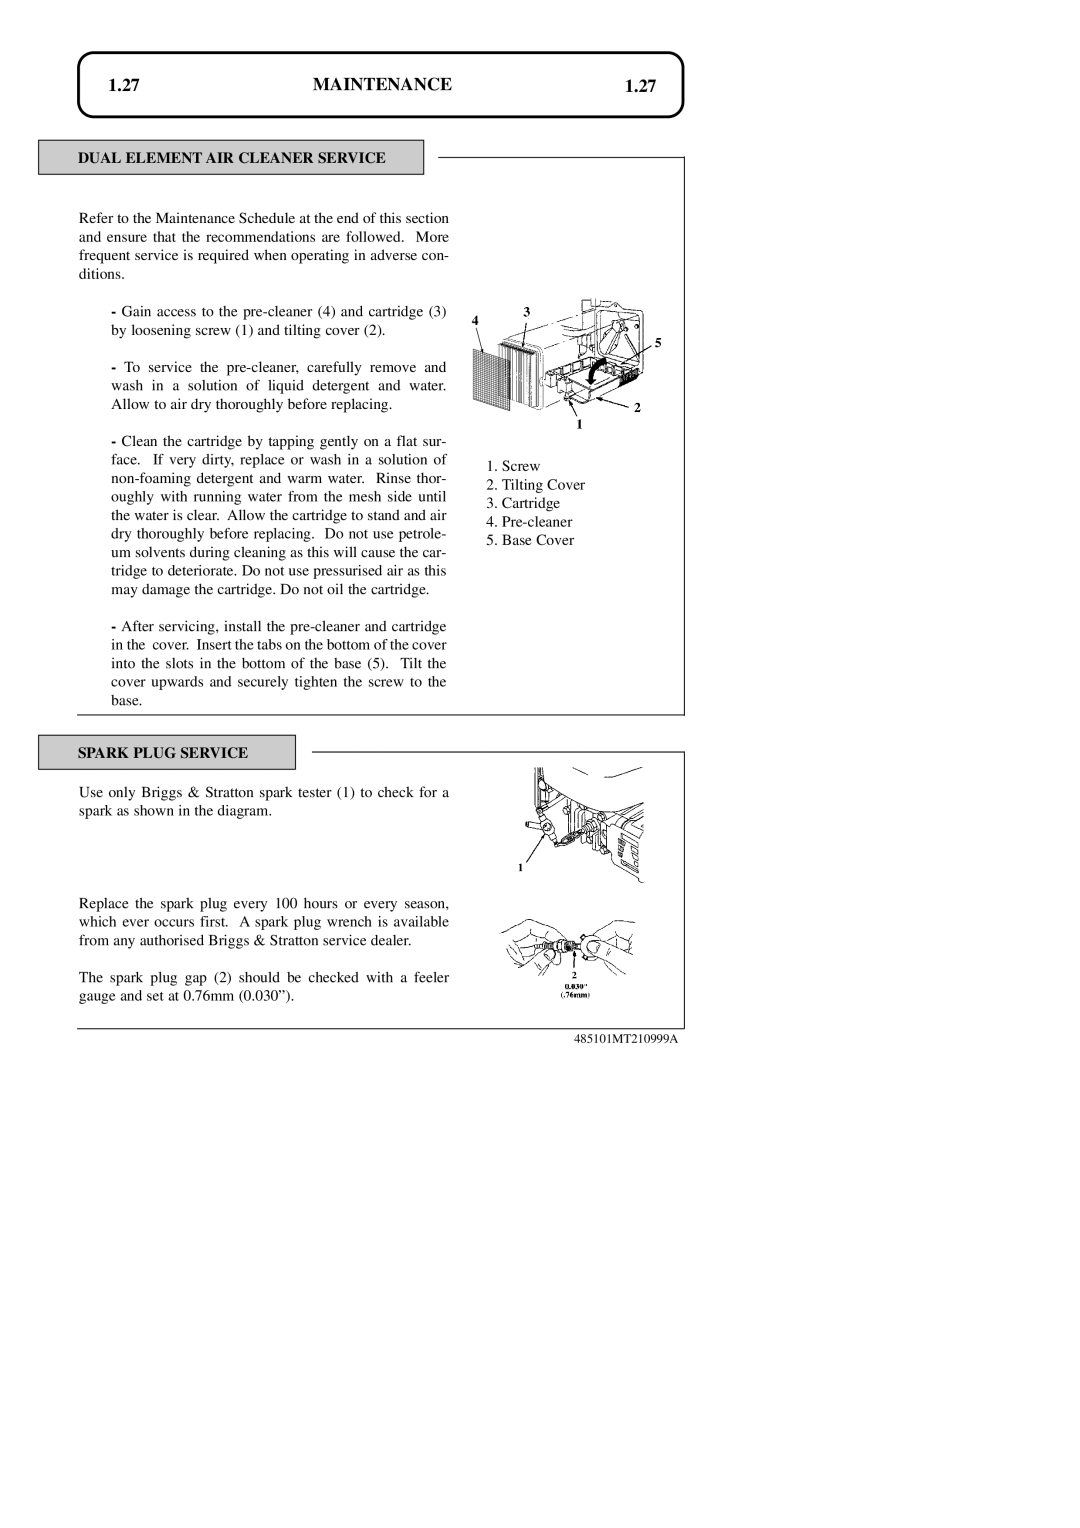 Hayter Mowers 48ST manual 1.27, Maintenance, Dual Element Air Cleaner Service, Spark Plug Service 